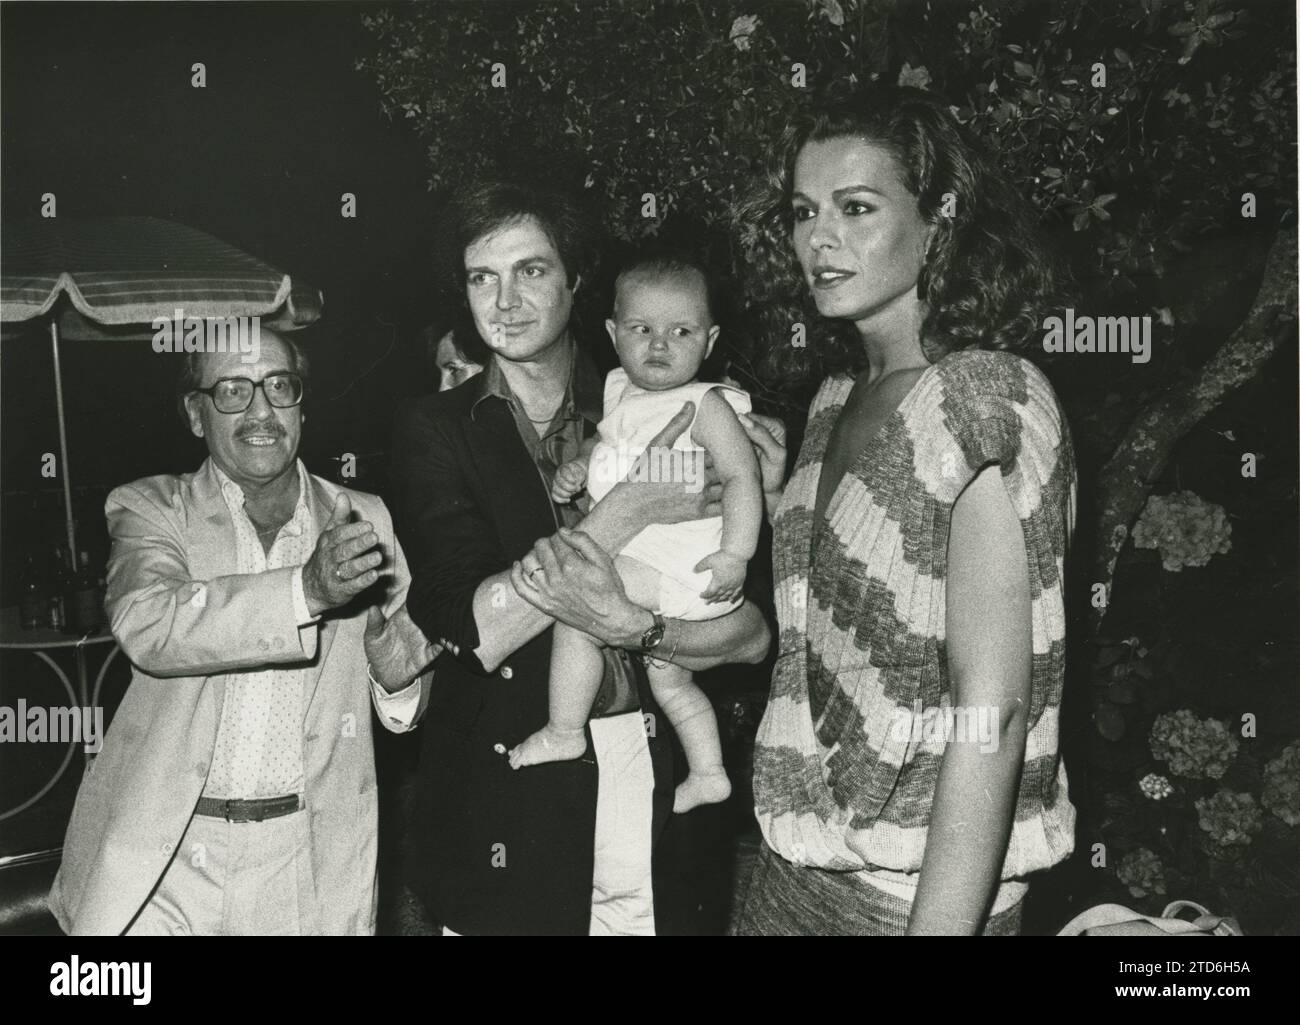 06/30/1984. José Luis López Vázquez, Camilo Sesto and Bibi Andersen. Credit: Album / Archivo ABC Stock Photo